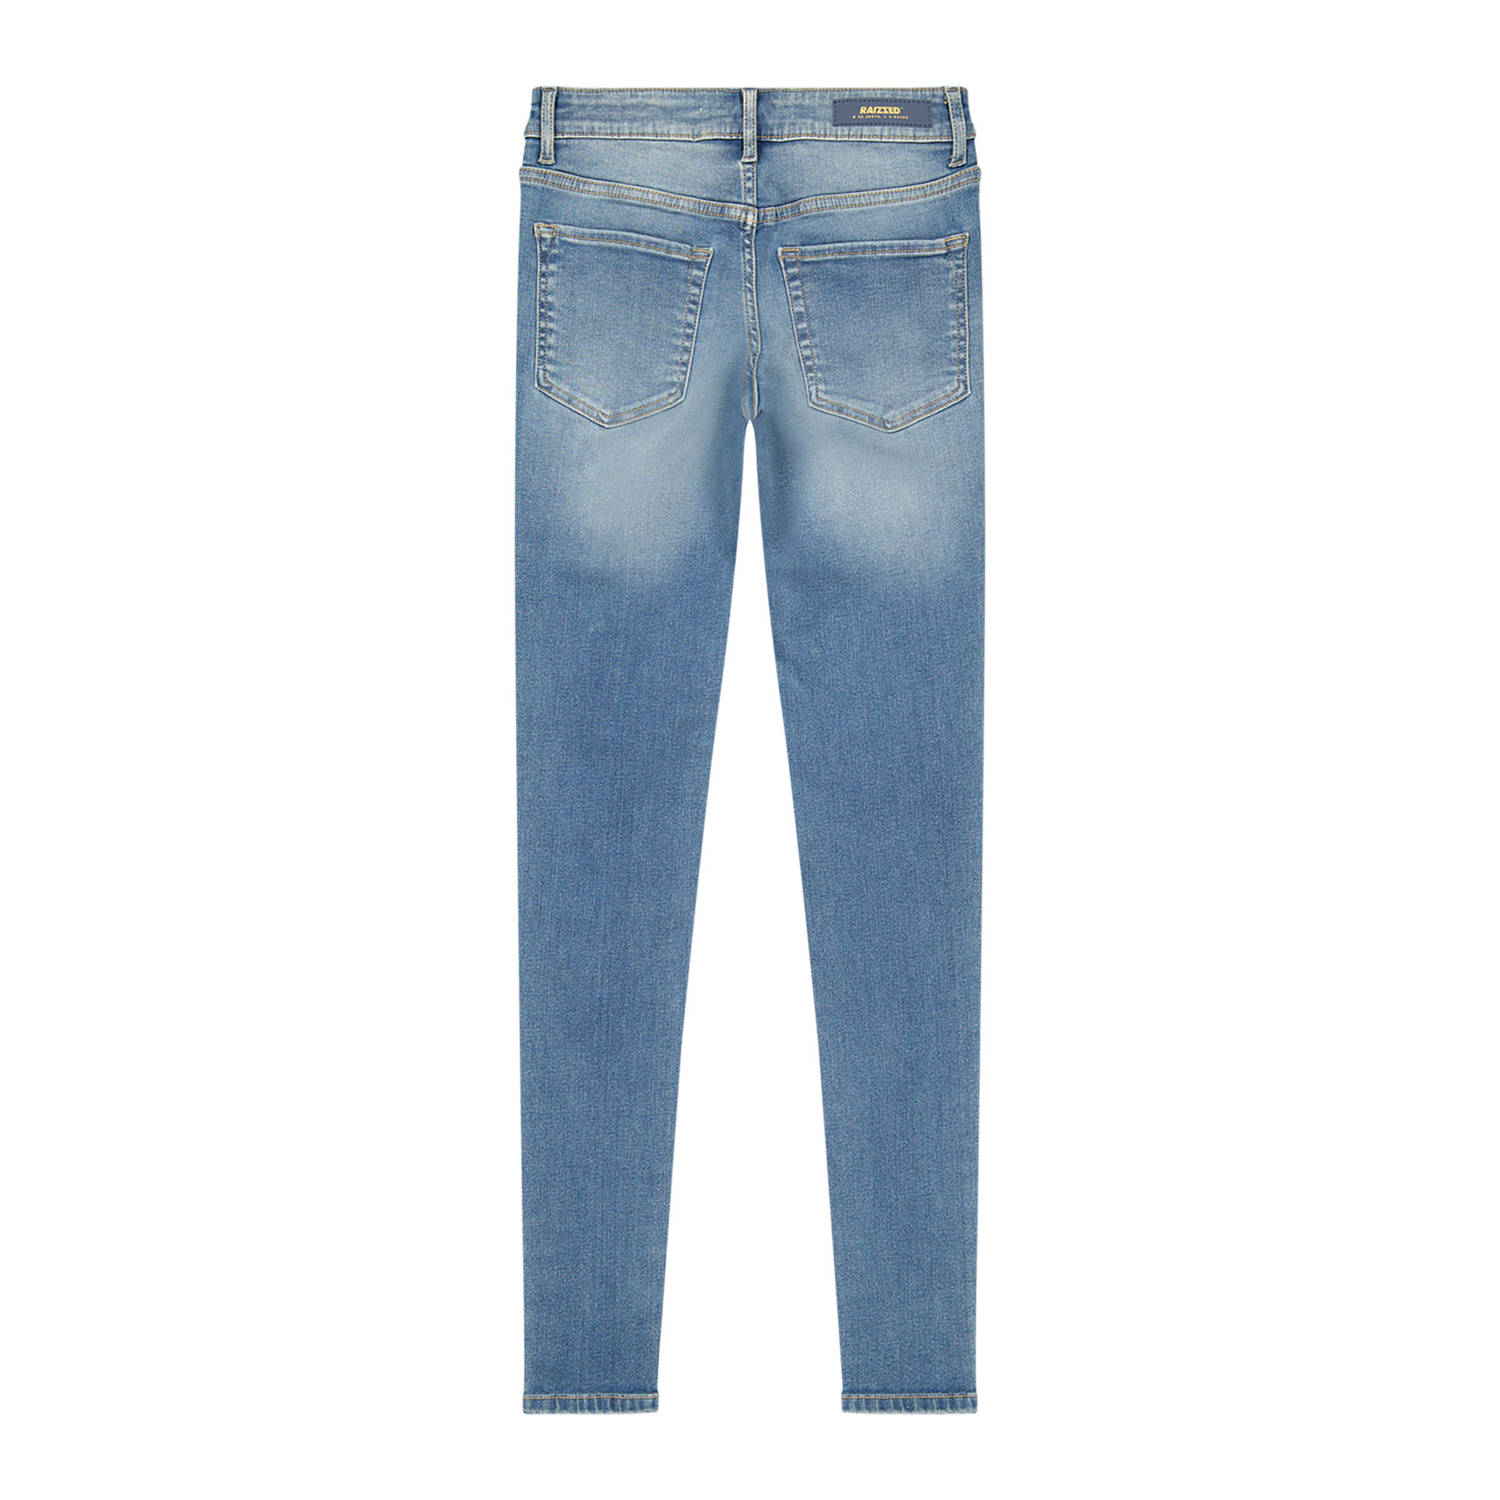 Raizzed high waist skinny jeans Montana light blue denim